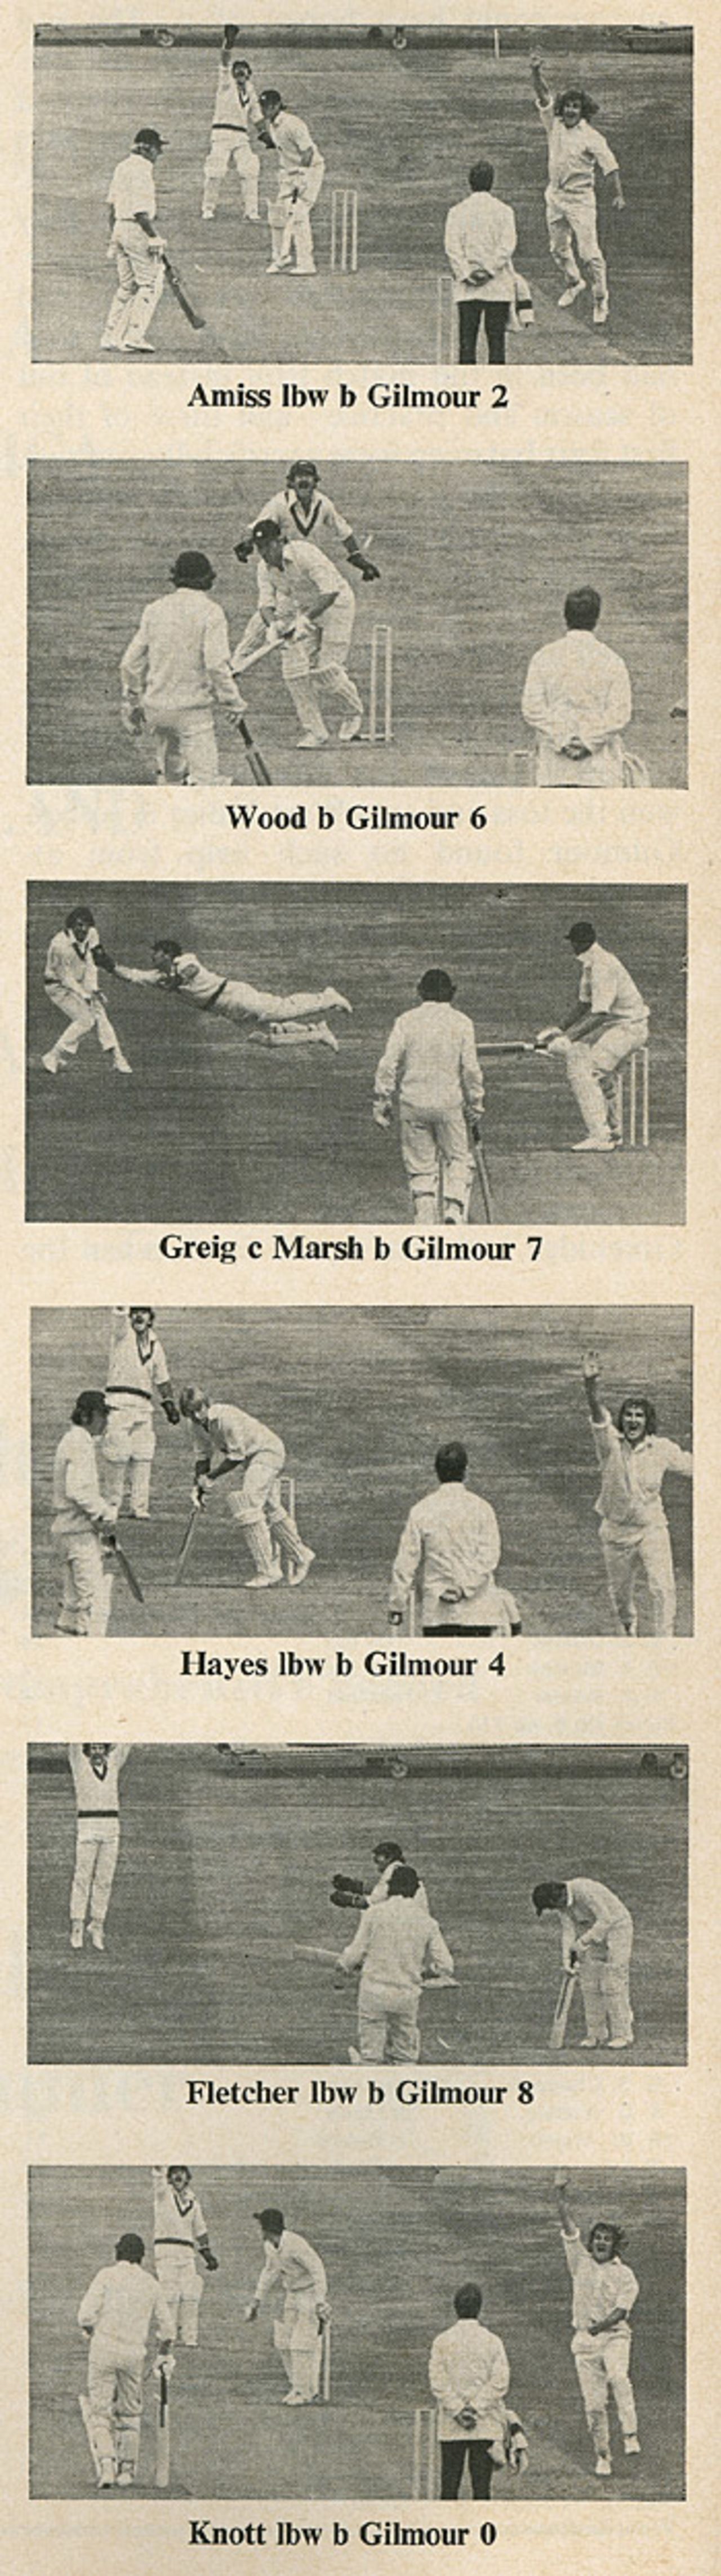 Gary Gilmour's remarkable 6 for 14, England v Australia, World Cup semi-final, Leeds, June 18, 1975